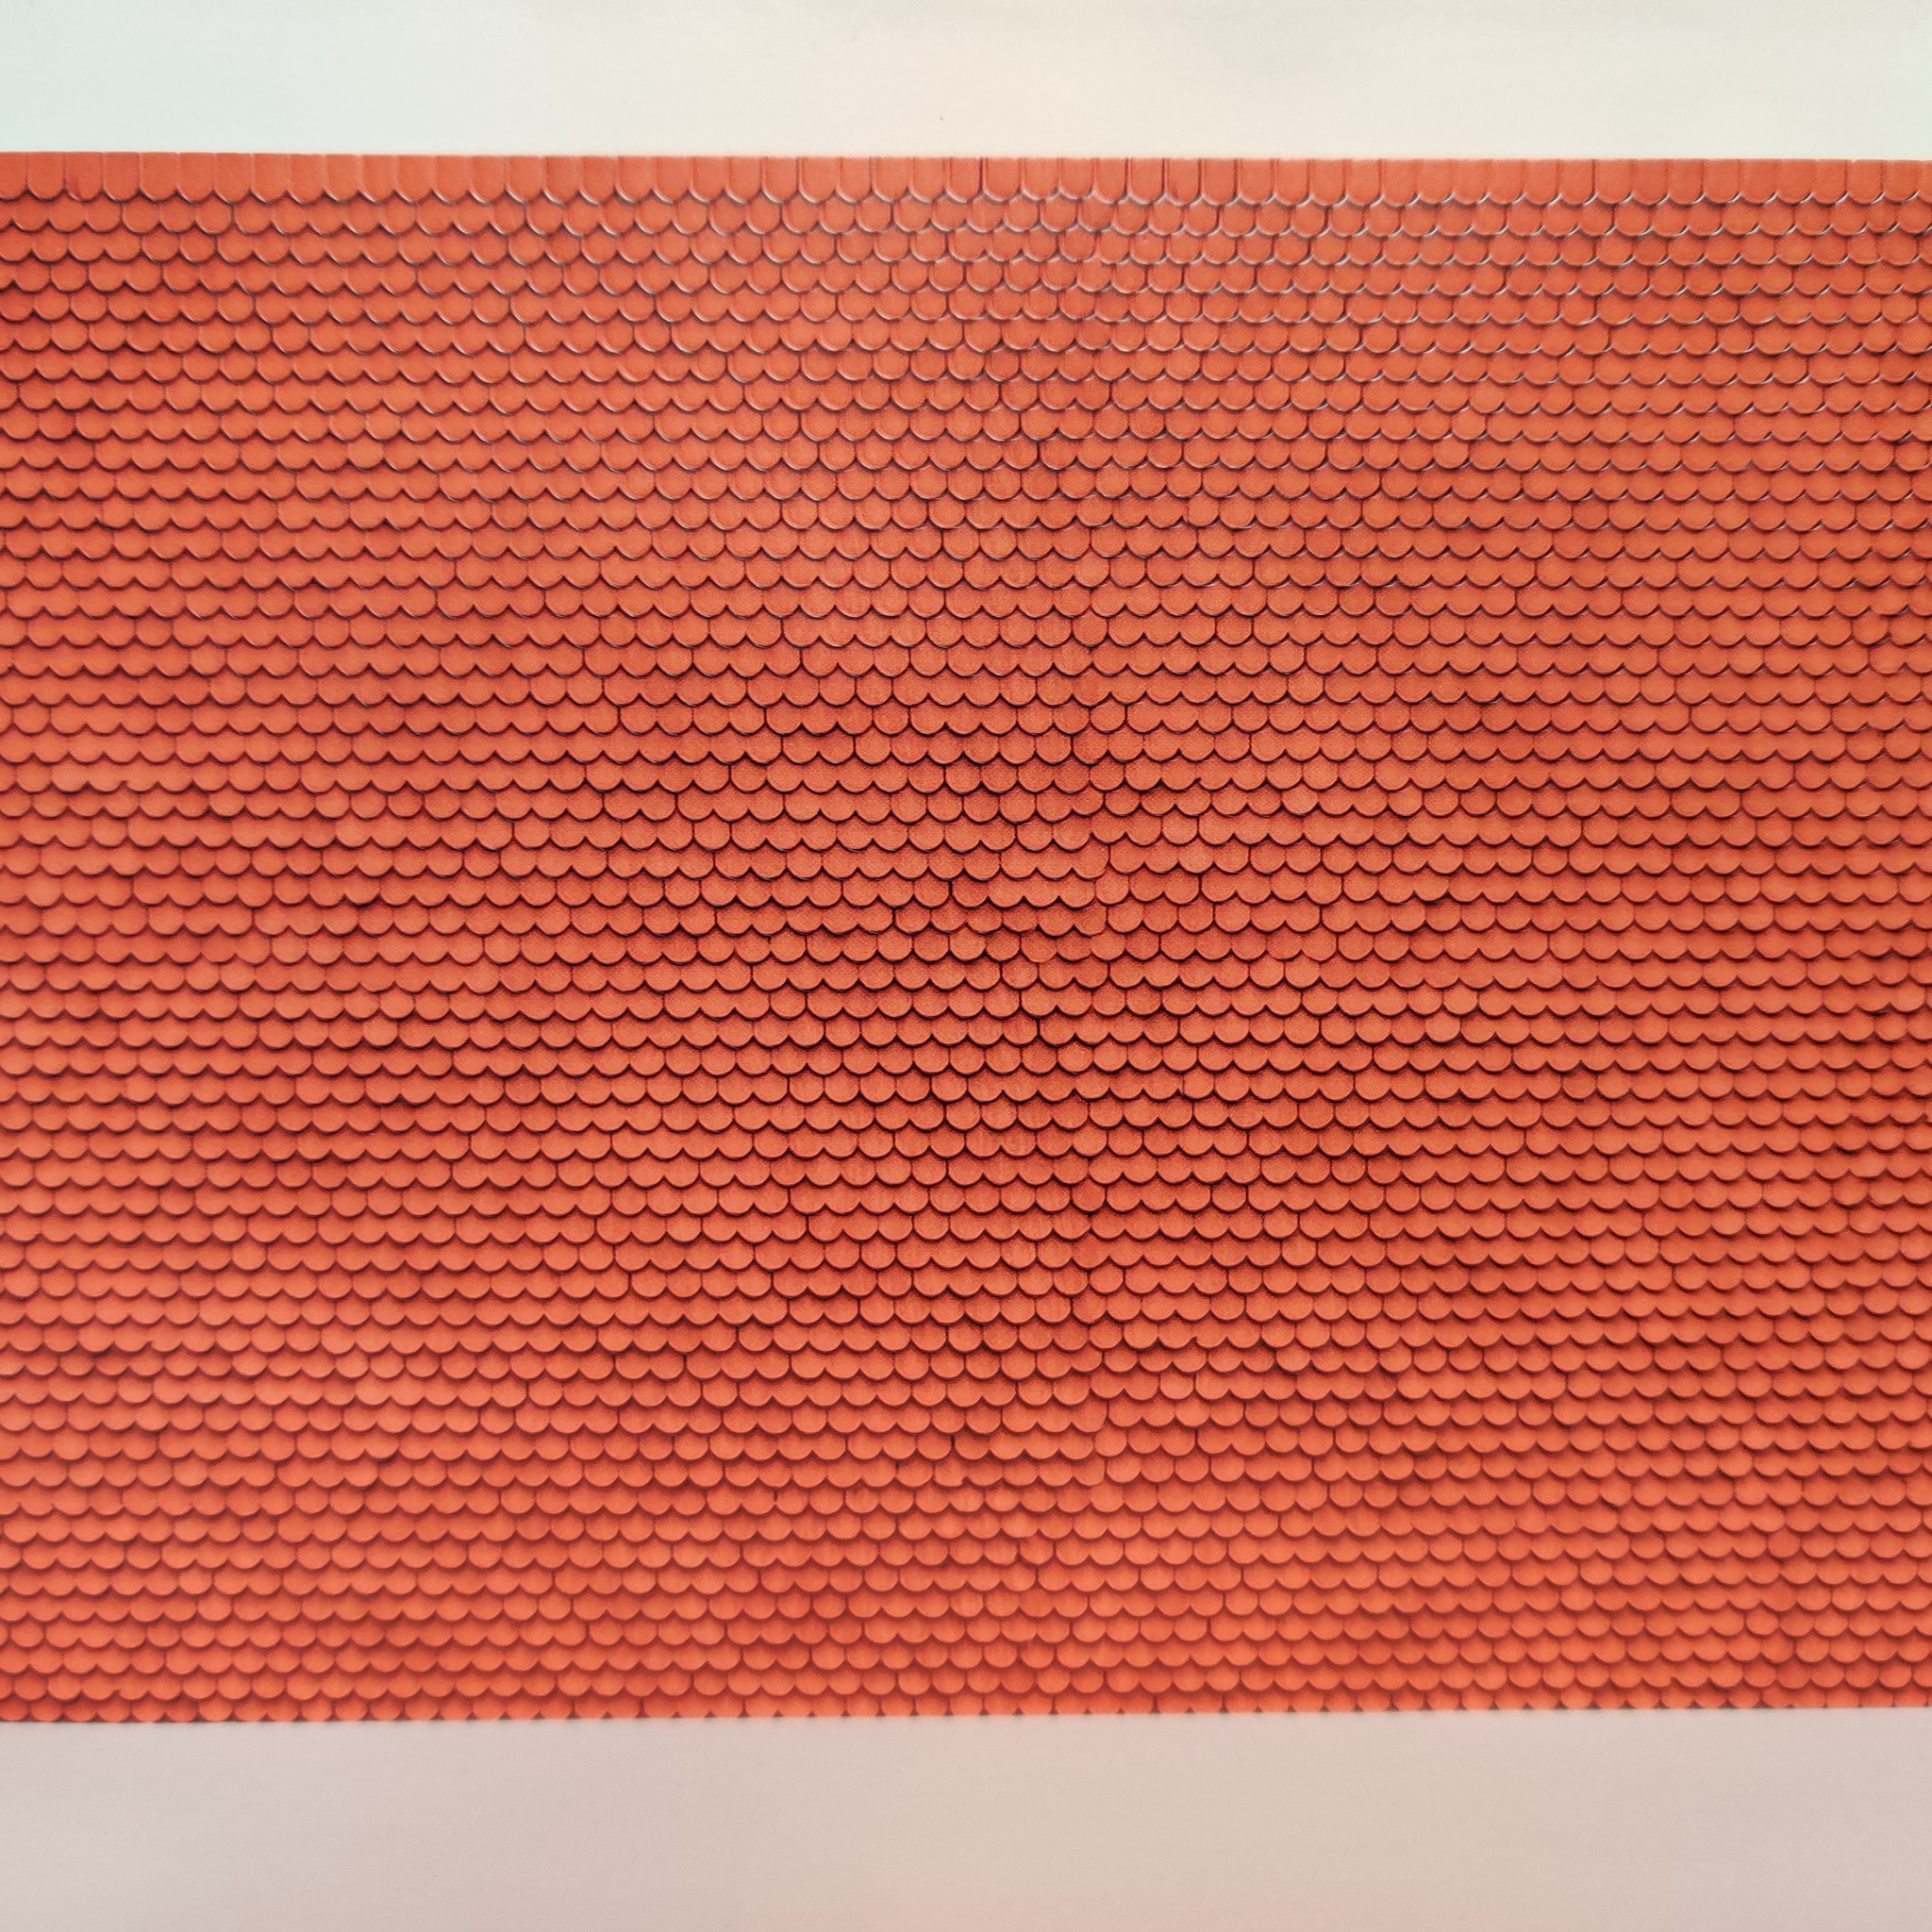 NOCH 56690 röda plattor/Plain Tile, red - 3D Cardboard Sheet 25x12,5 cm f H0 & TT